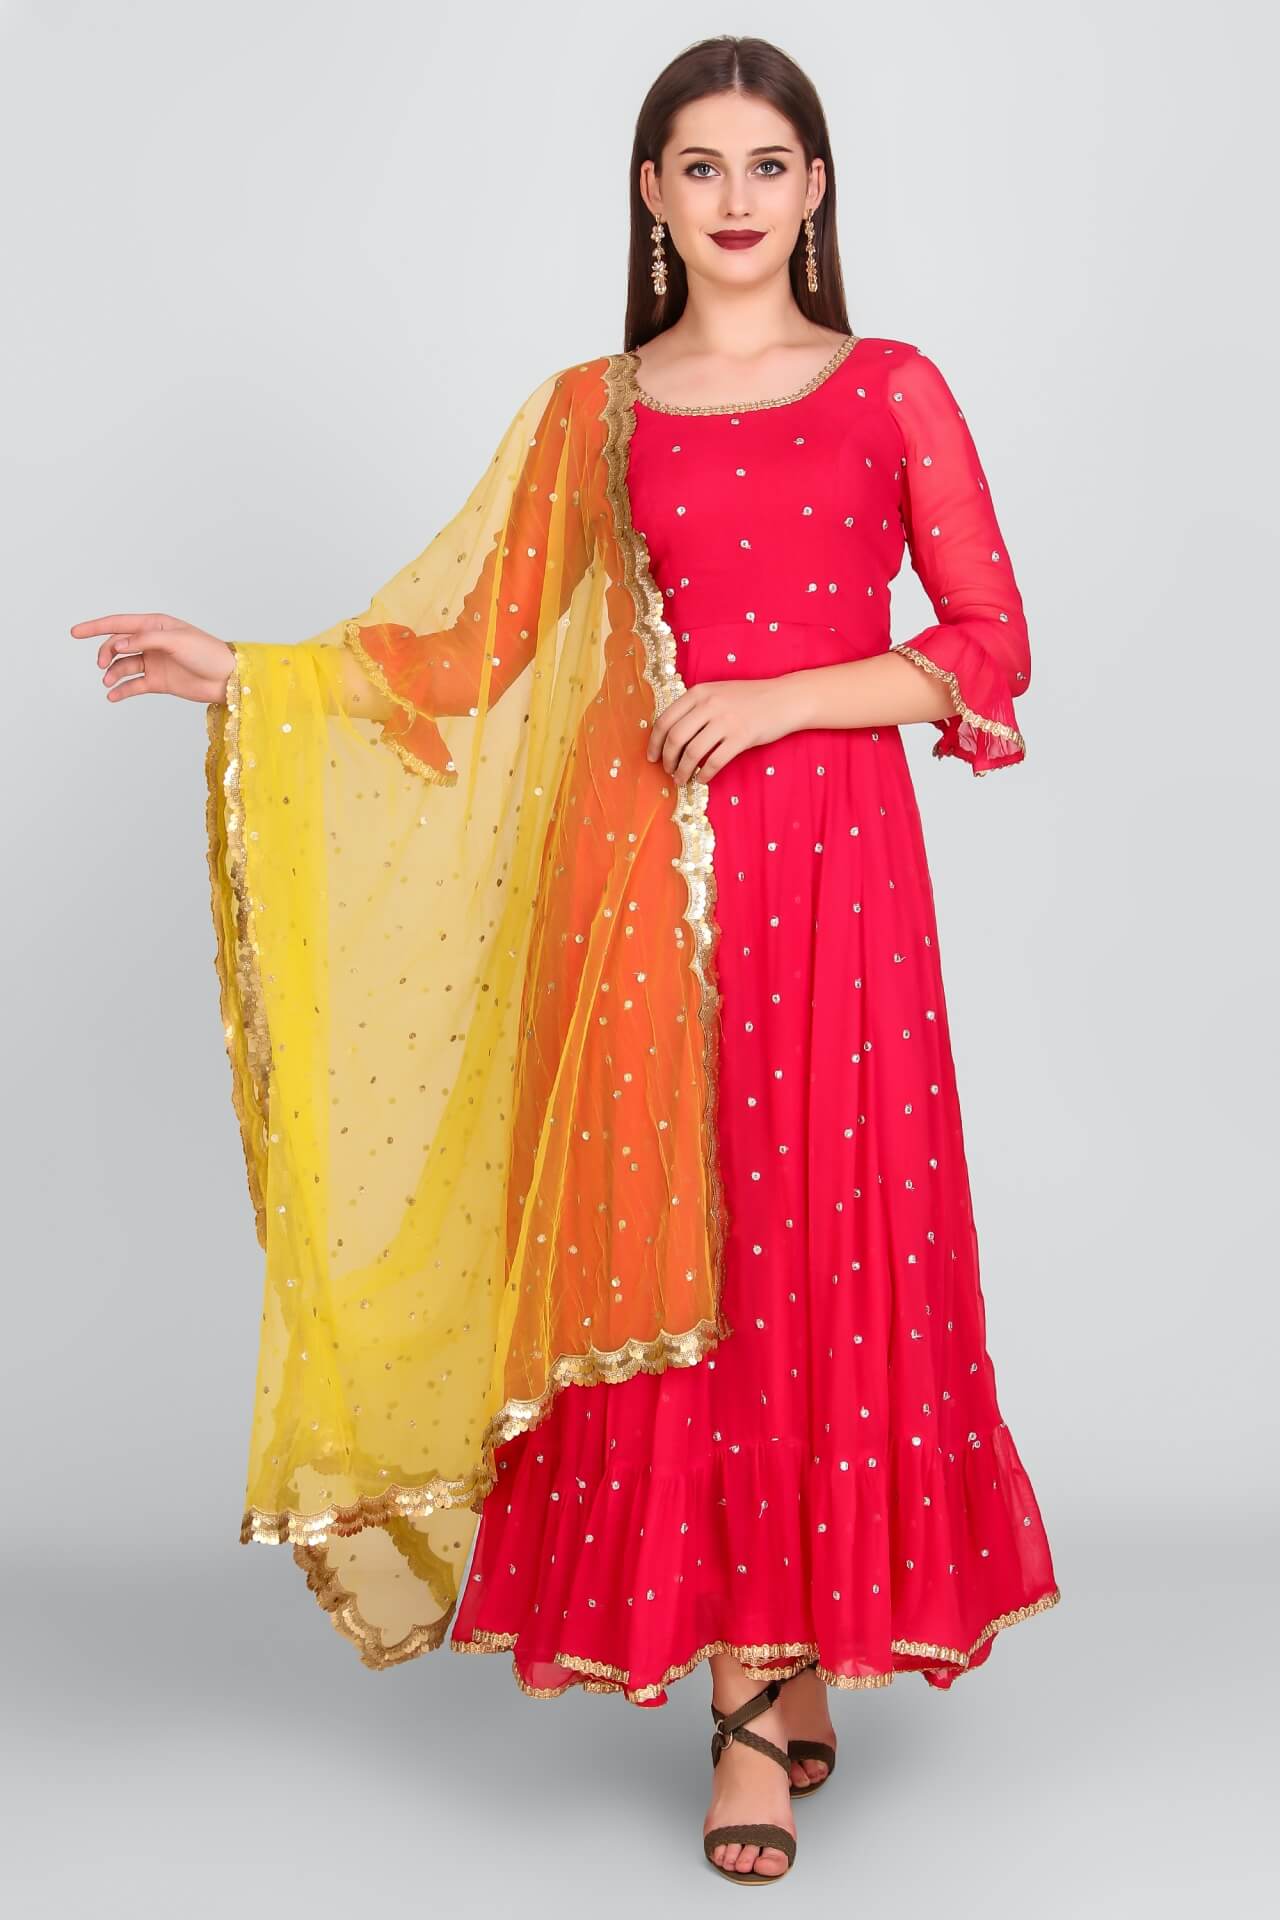 Hot Pink Mukaish Anarkali With Yellow Sequins Dupatta | Ghera By Neera ...